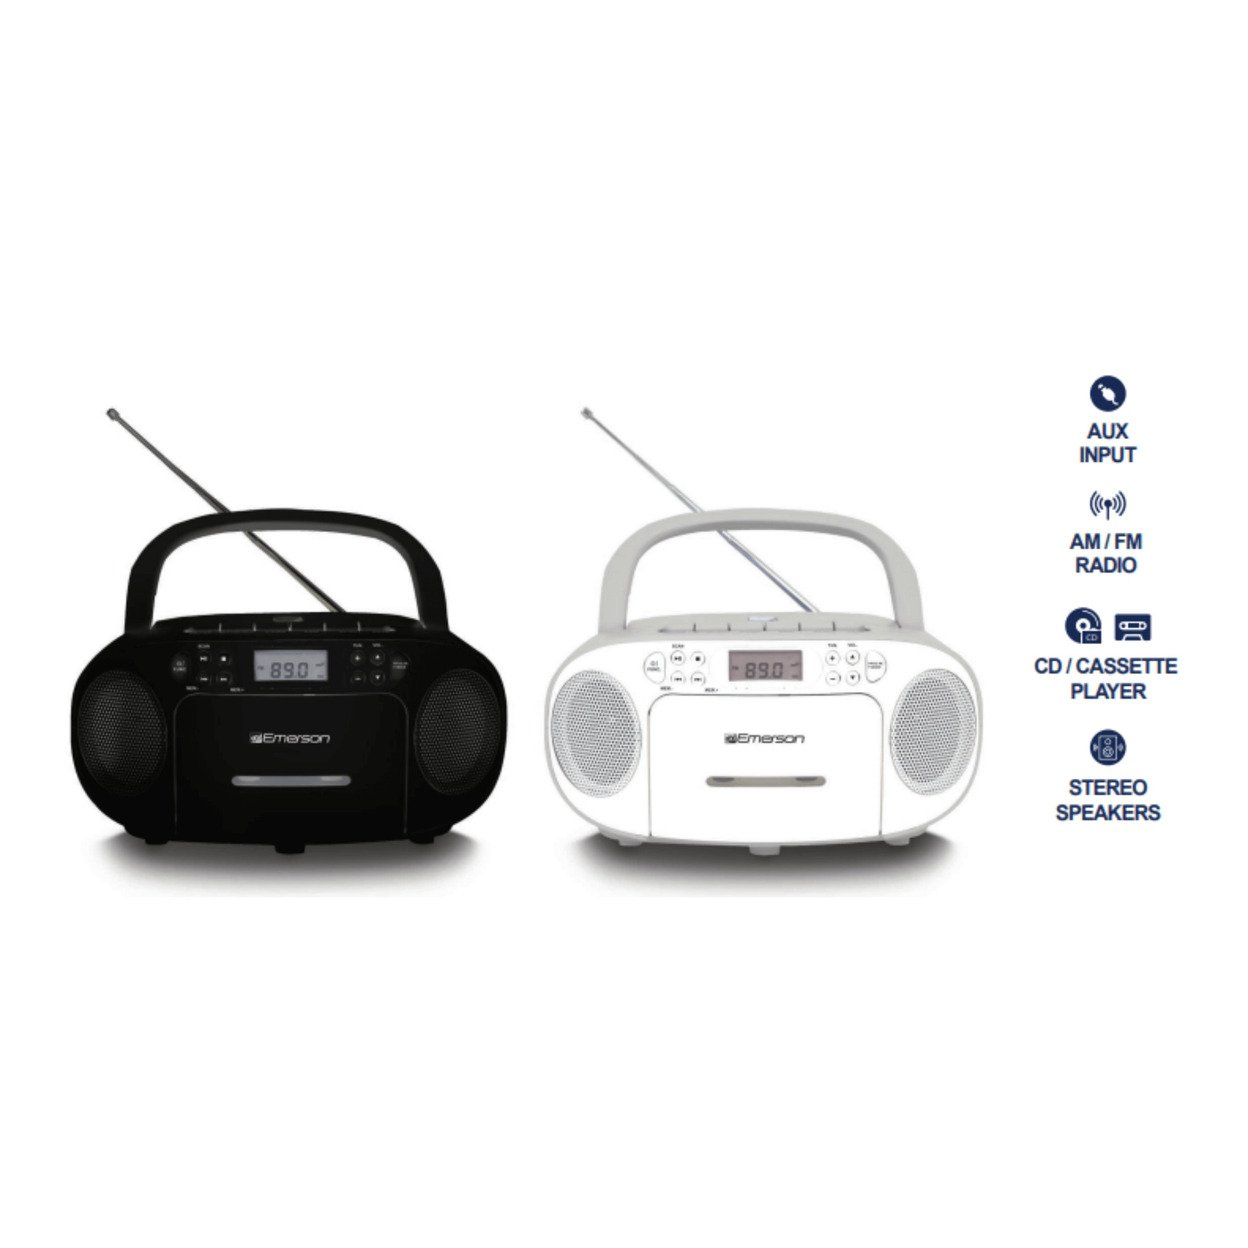 Emerson Portable CD/Cassette Boombox With AM/FM Radio - White